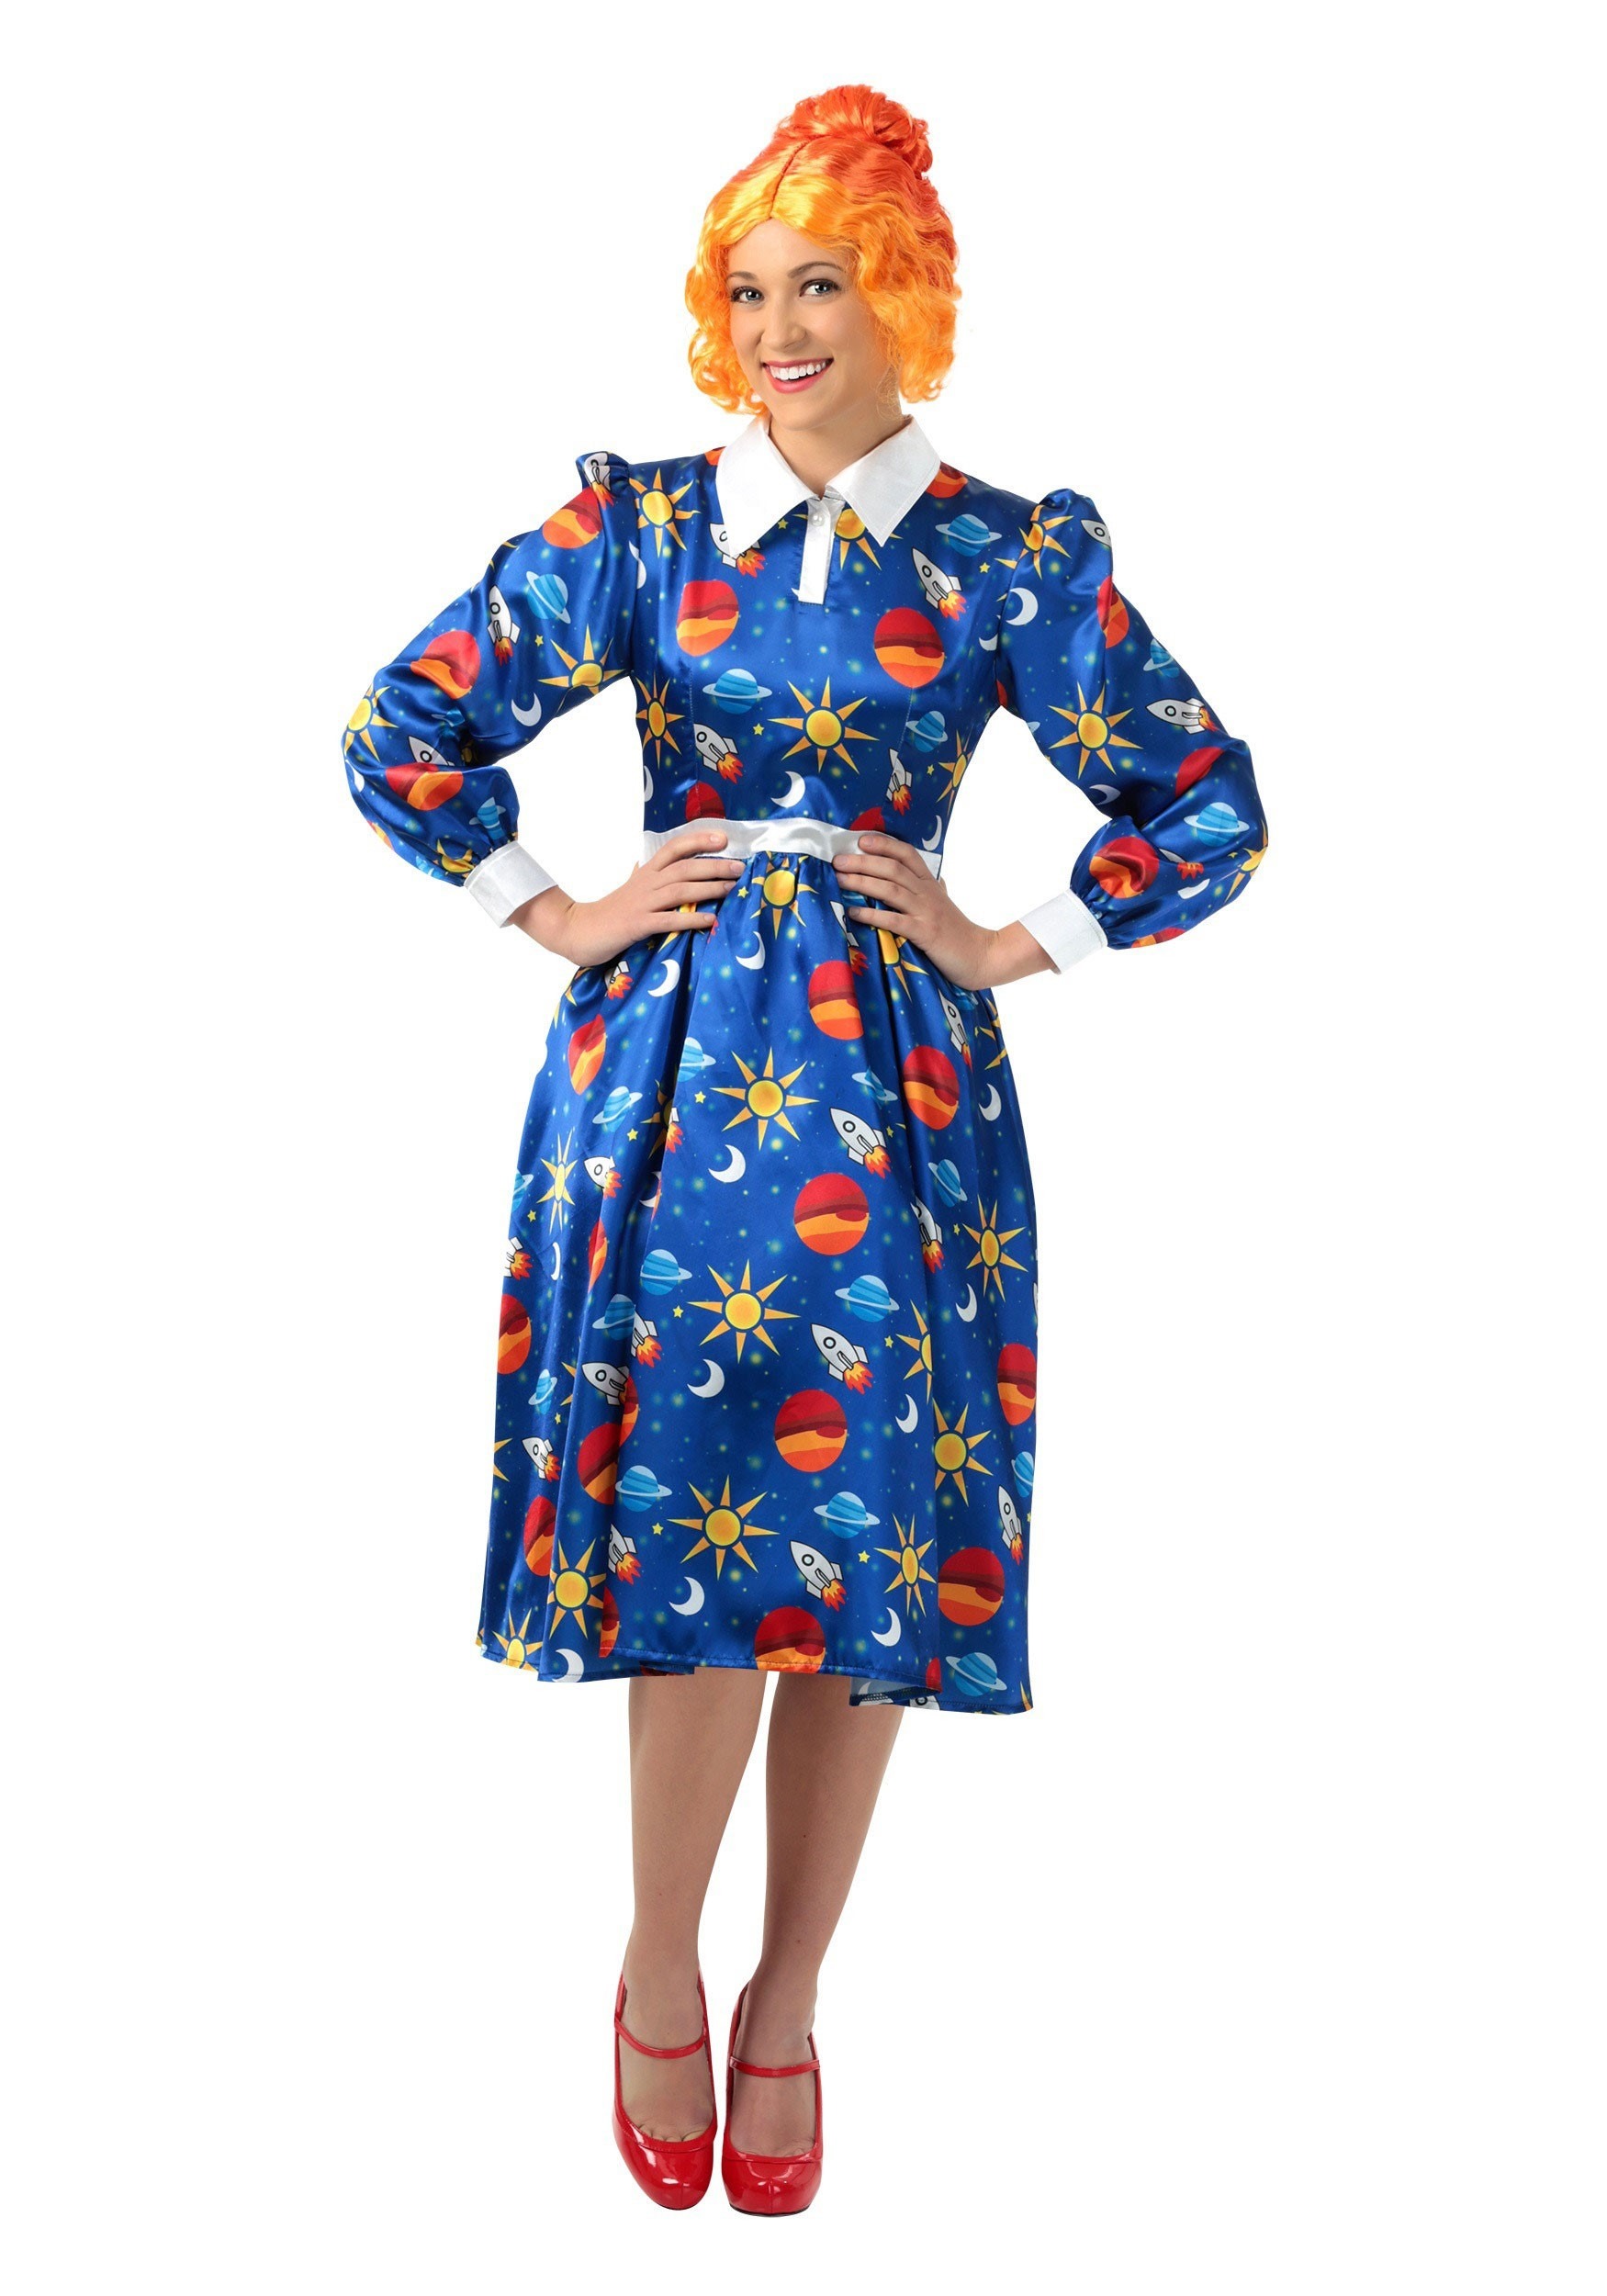 The Magic School Bus Miss Frizzle Plus Size Fancy Dress Costume for Women. 